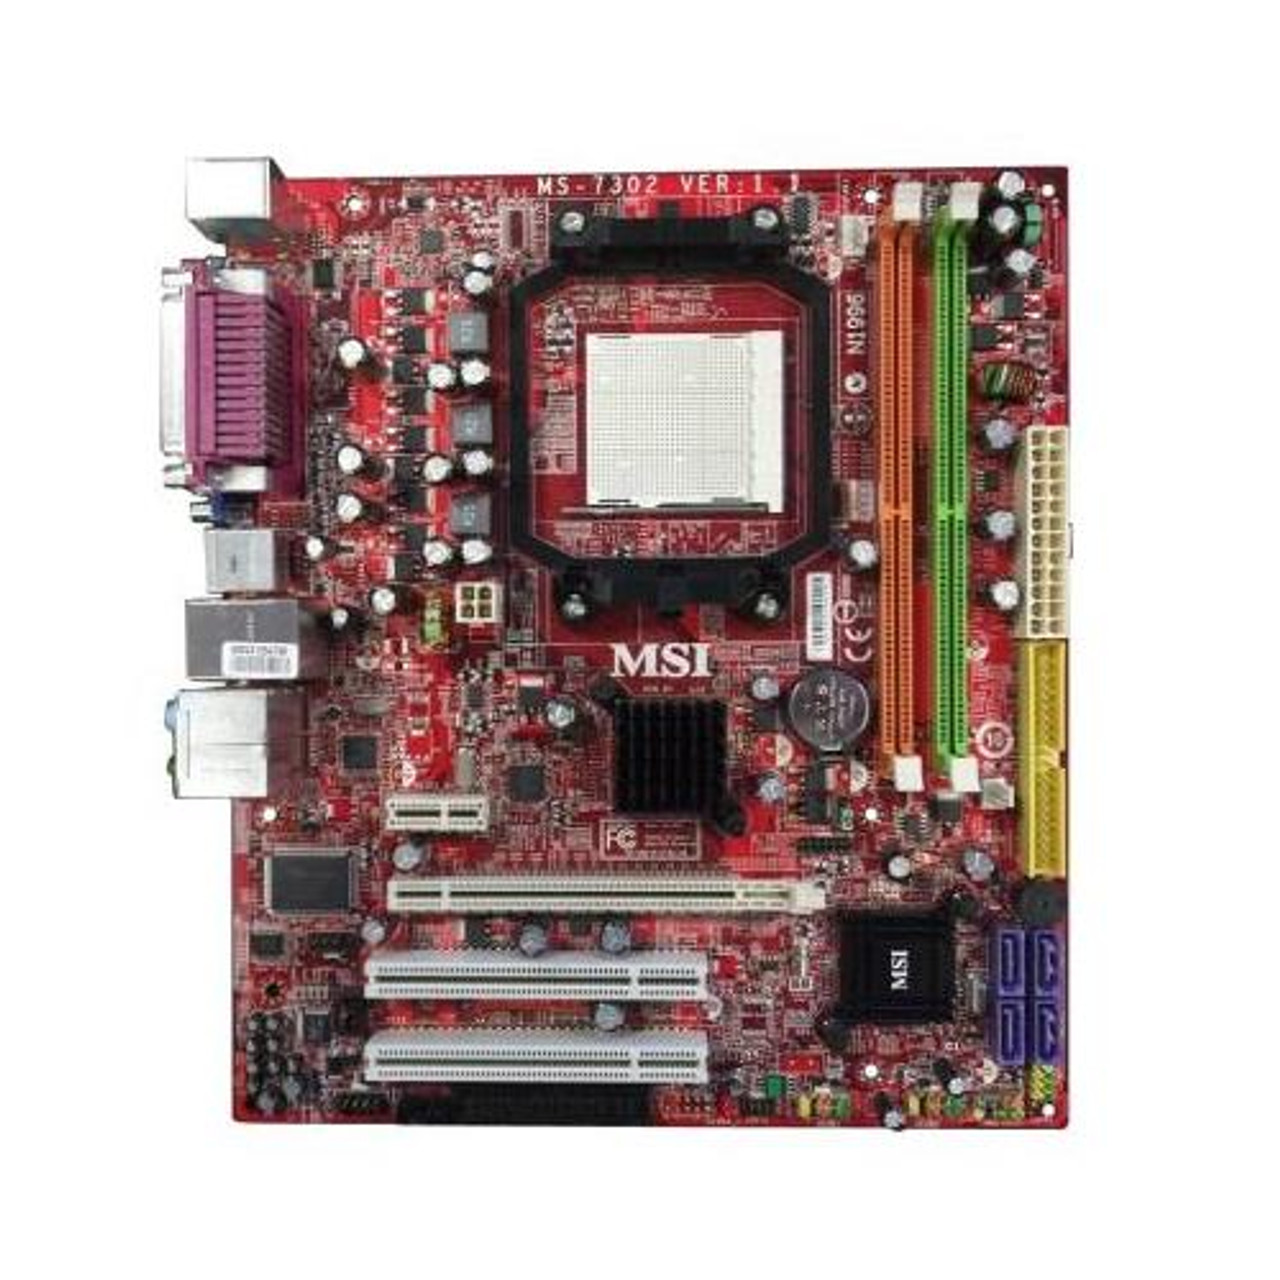 MS-7302 MSI AMD 740 SB700 Socket AM2 